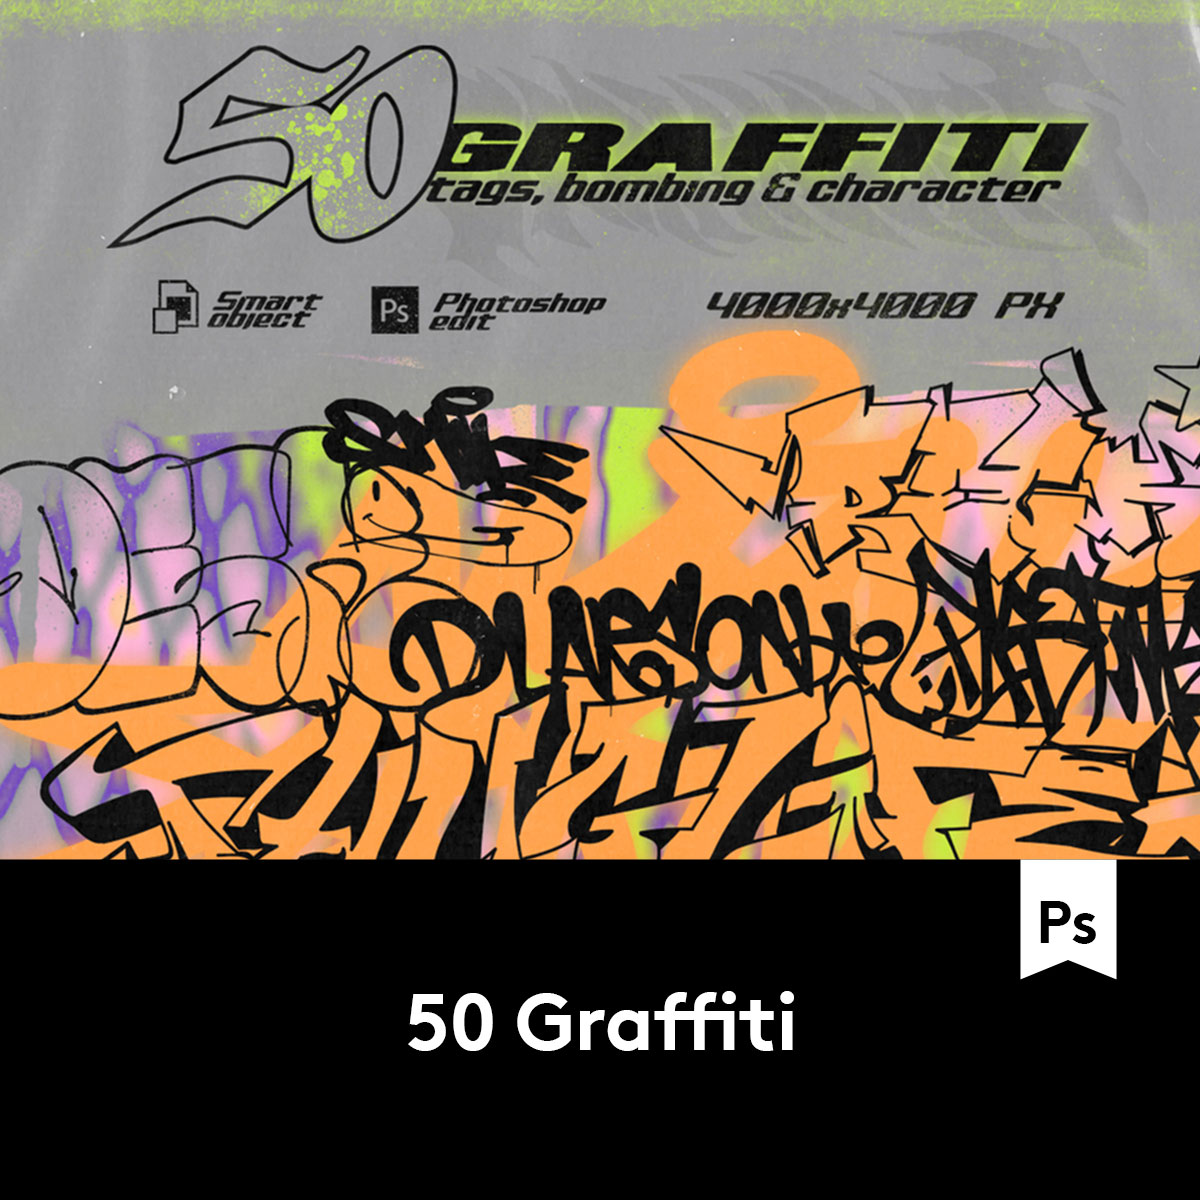 50 Graffiti 潮流街头风